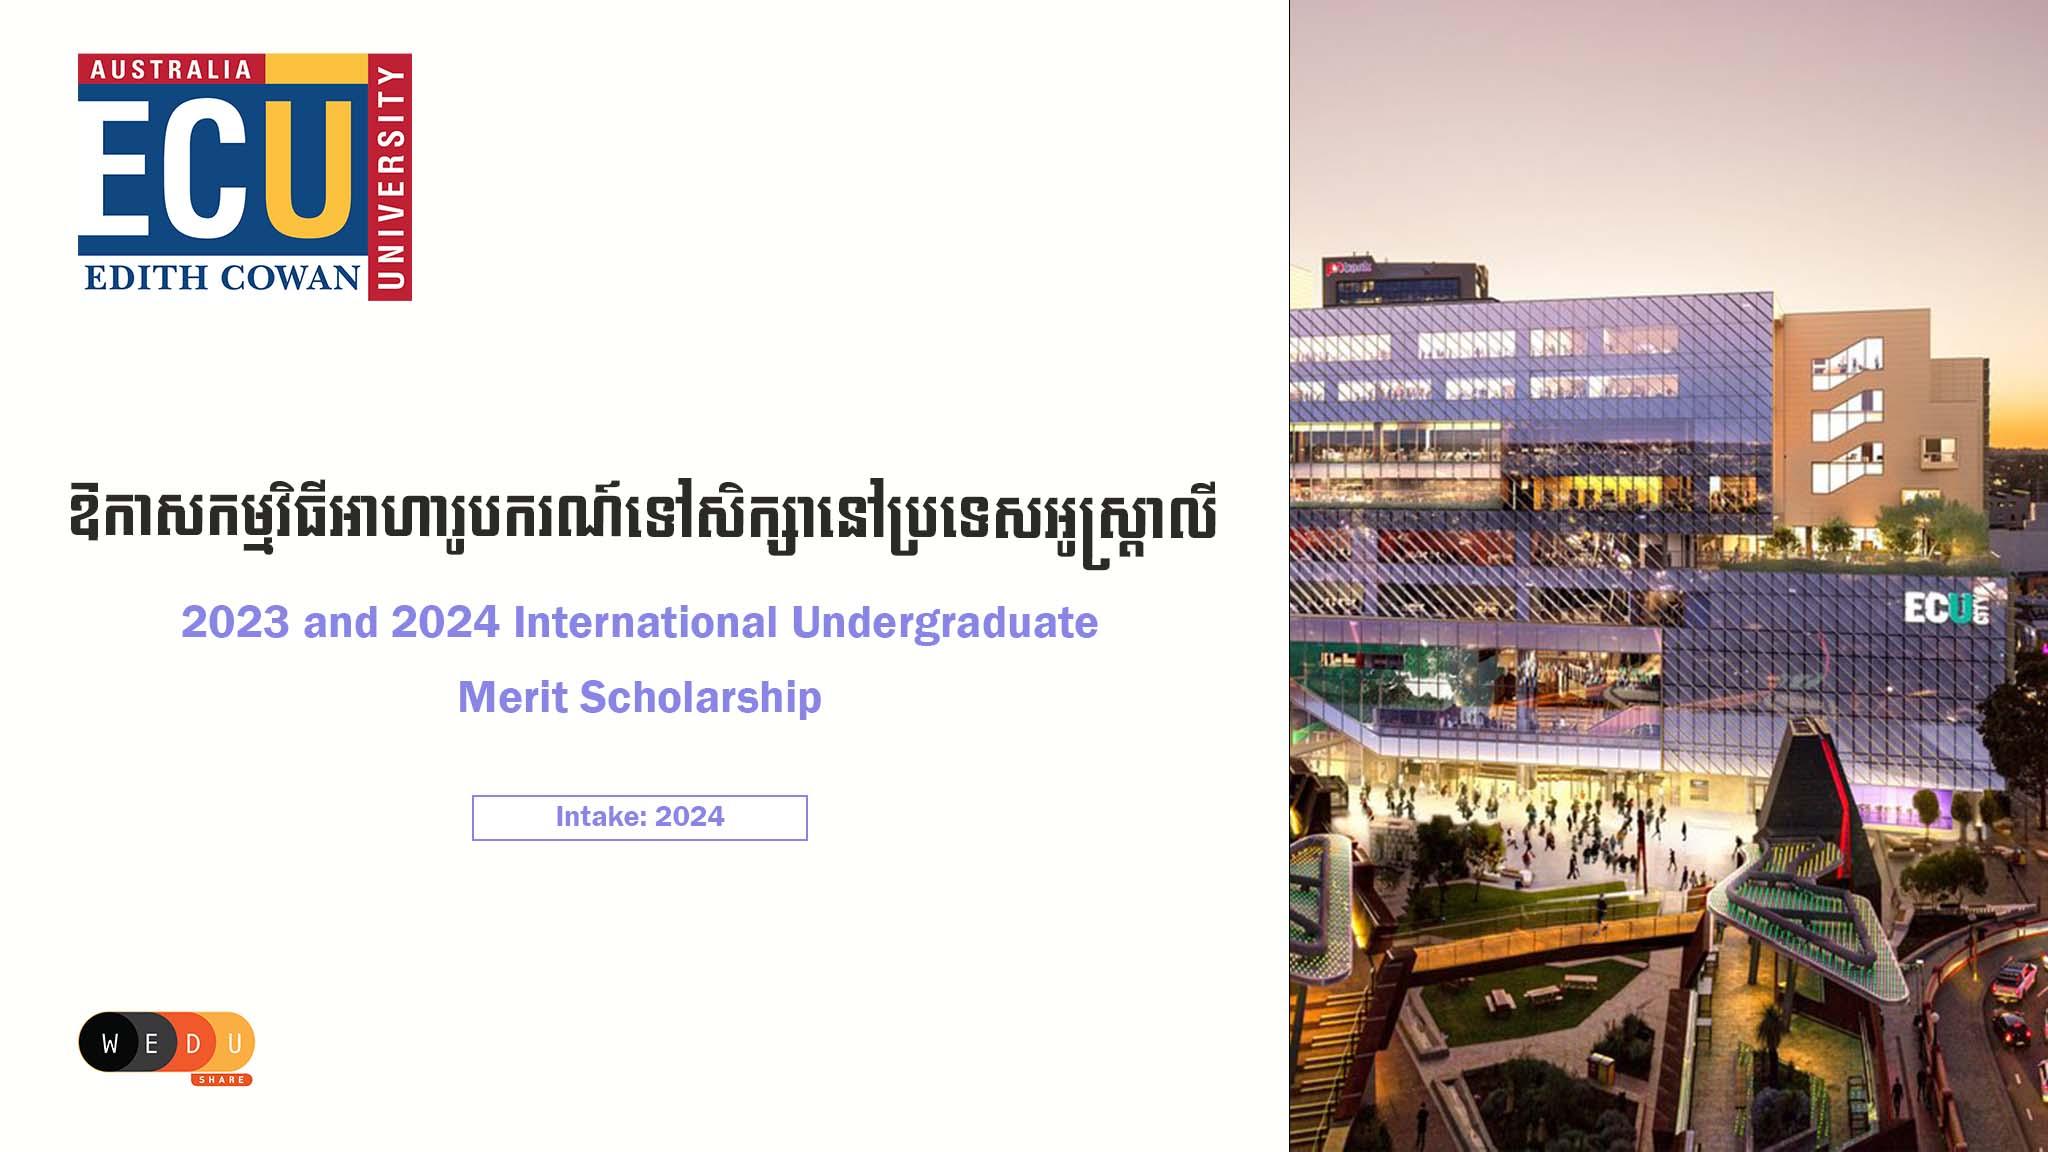 2023 and 2024 International Undergraduate Merit Scholarship